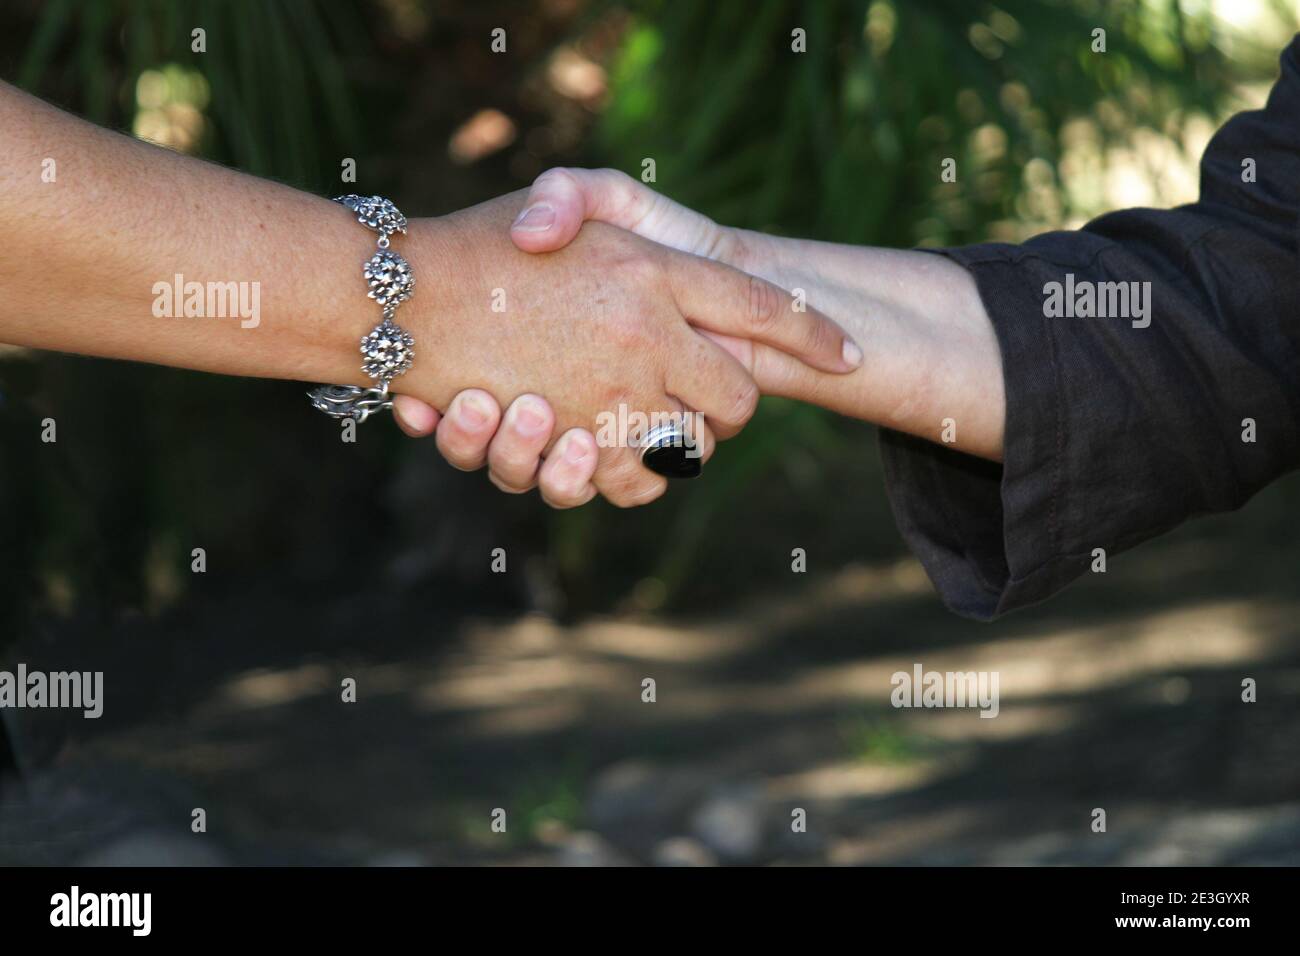 Two women shaking hands Stock Photo